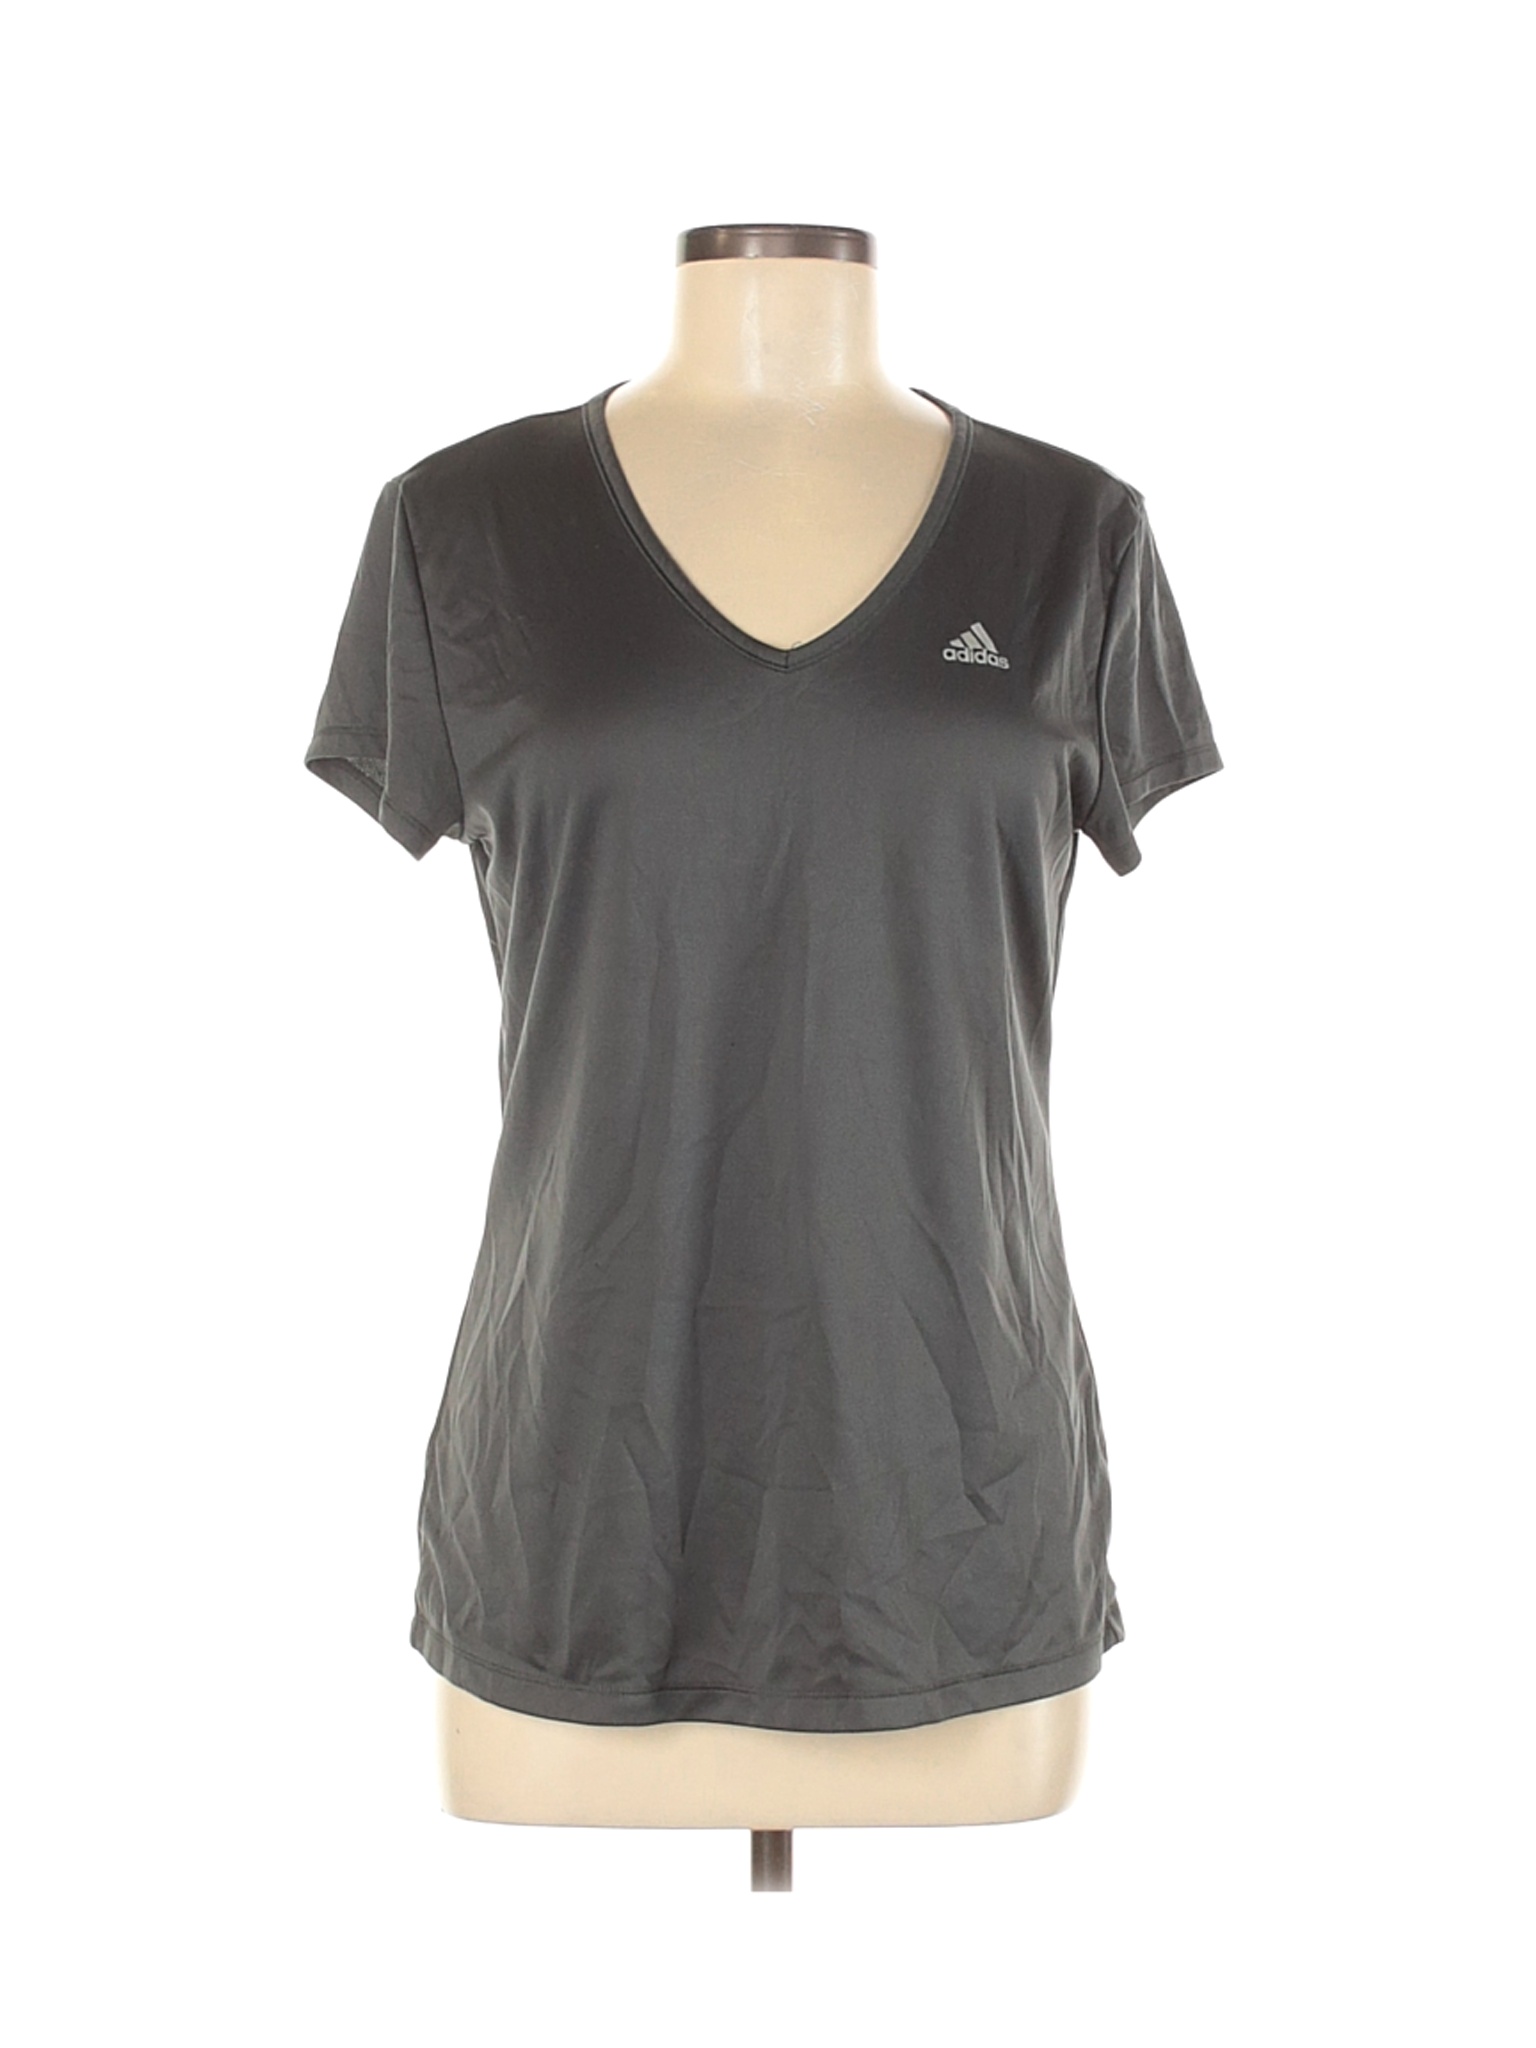 Adidas Women Gray Active T-Shirt M | eBay